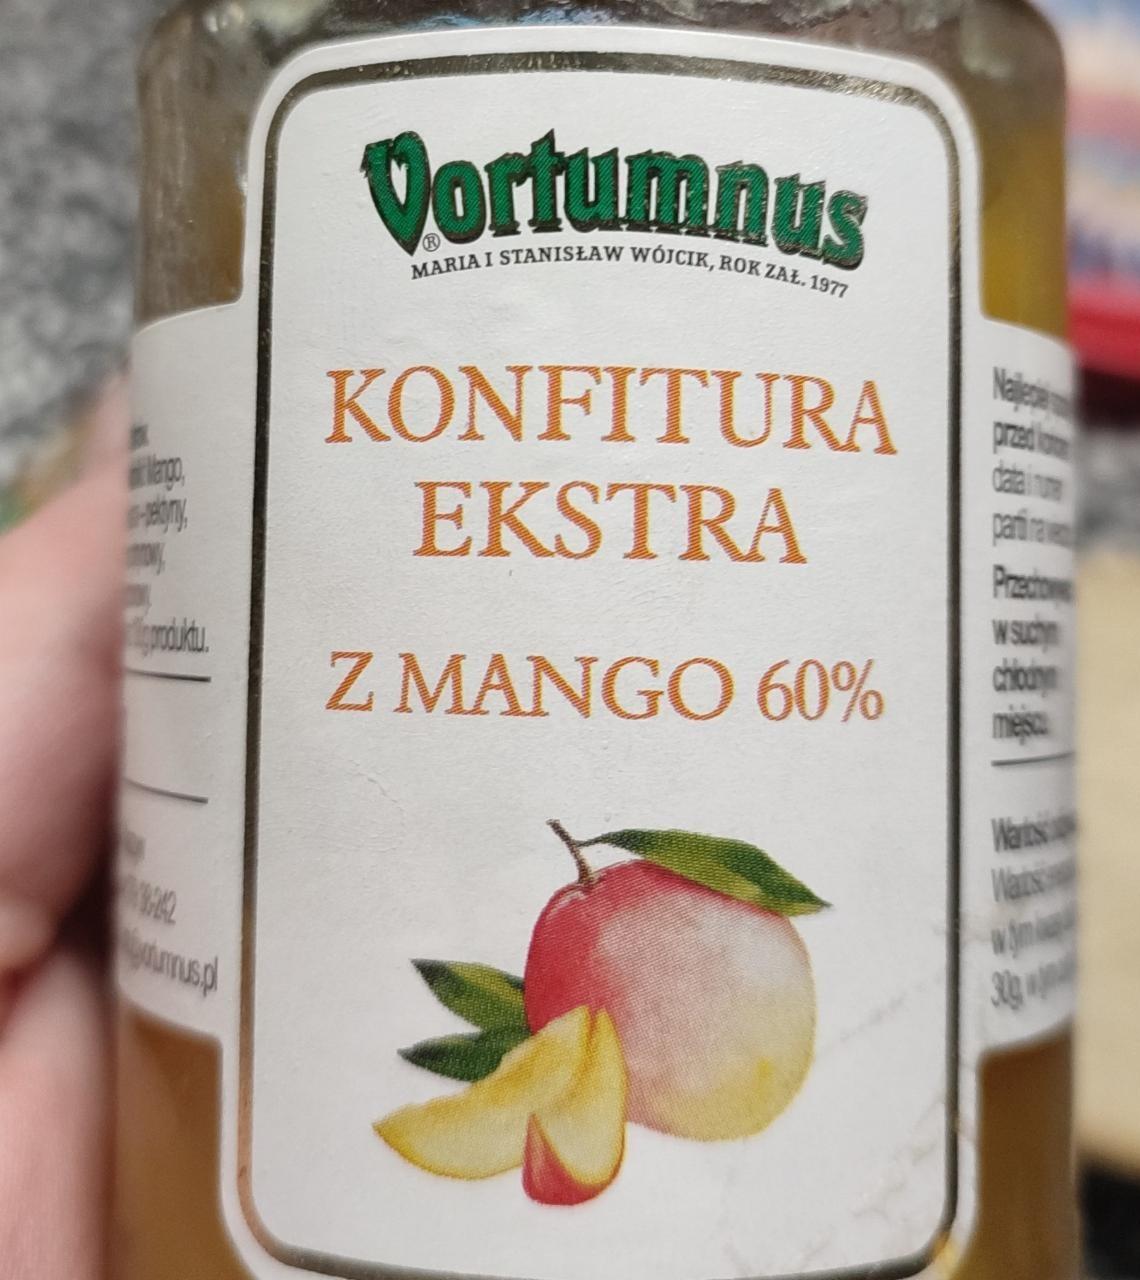 Zdjęcia - konfitura ekstra z mango 60% Vortumnus